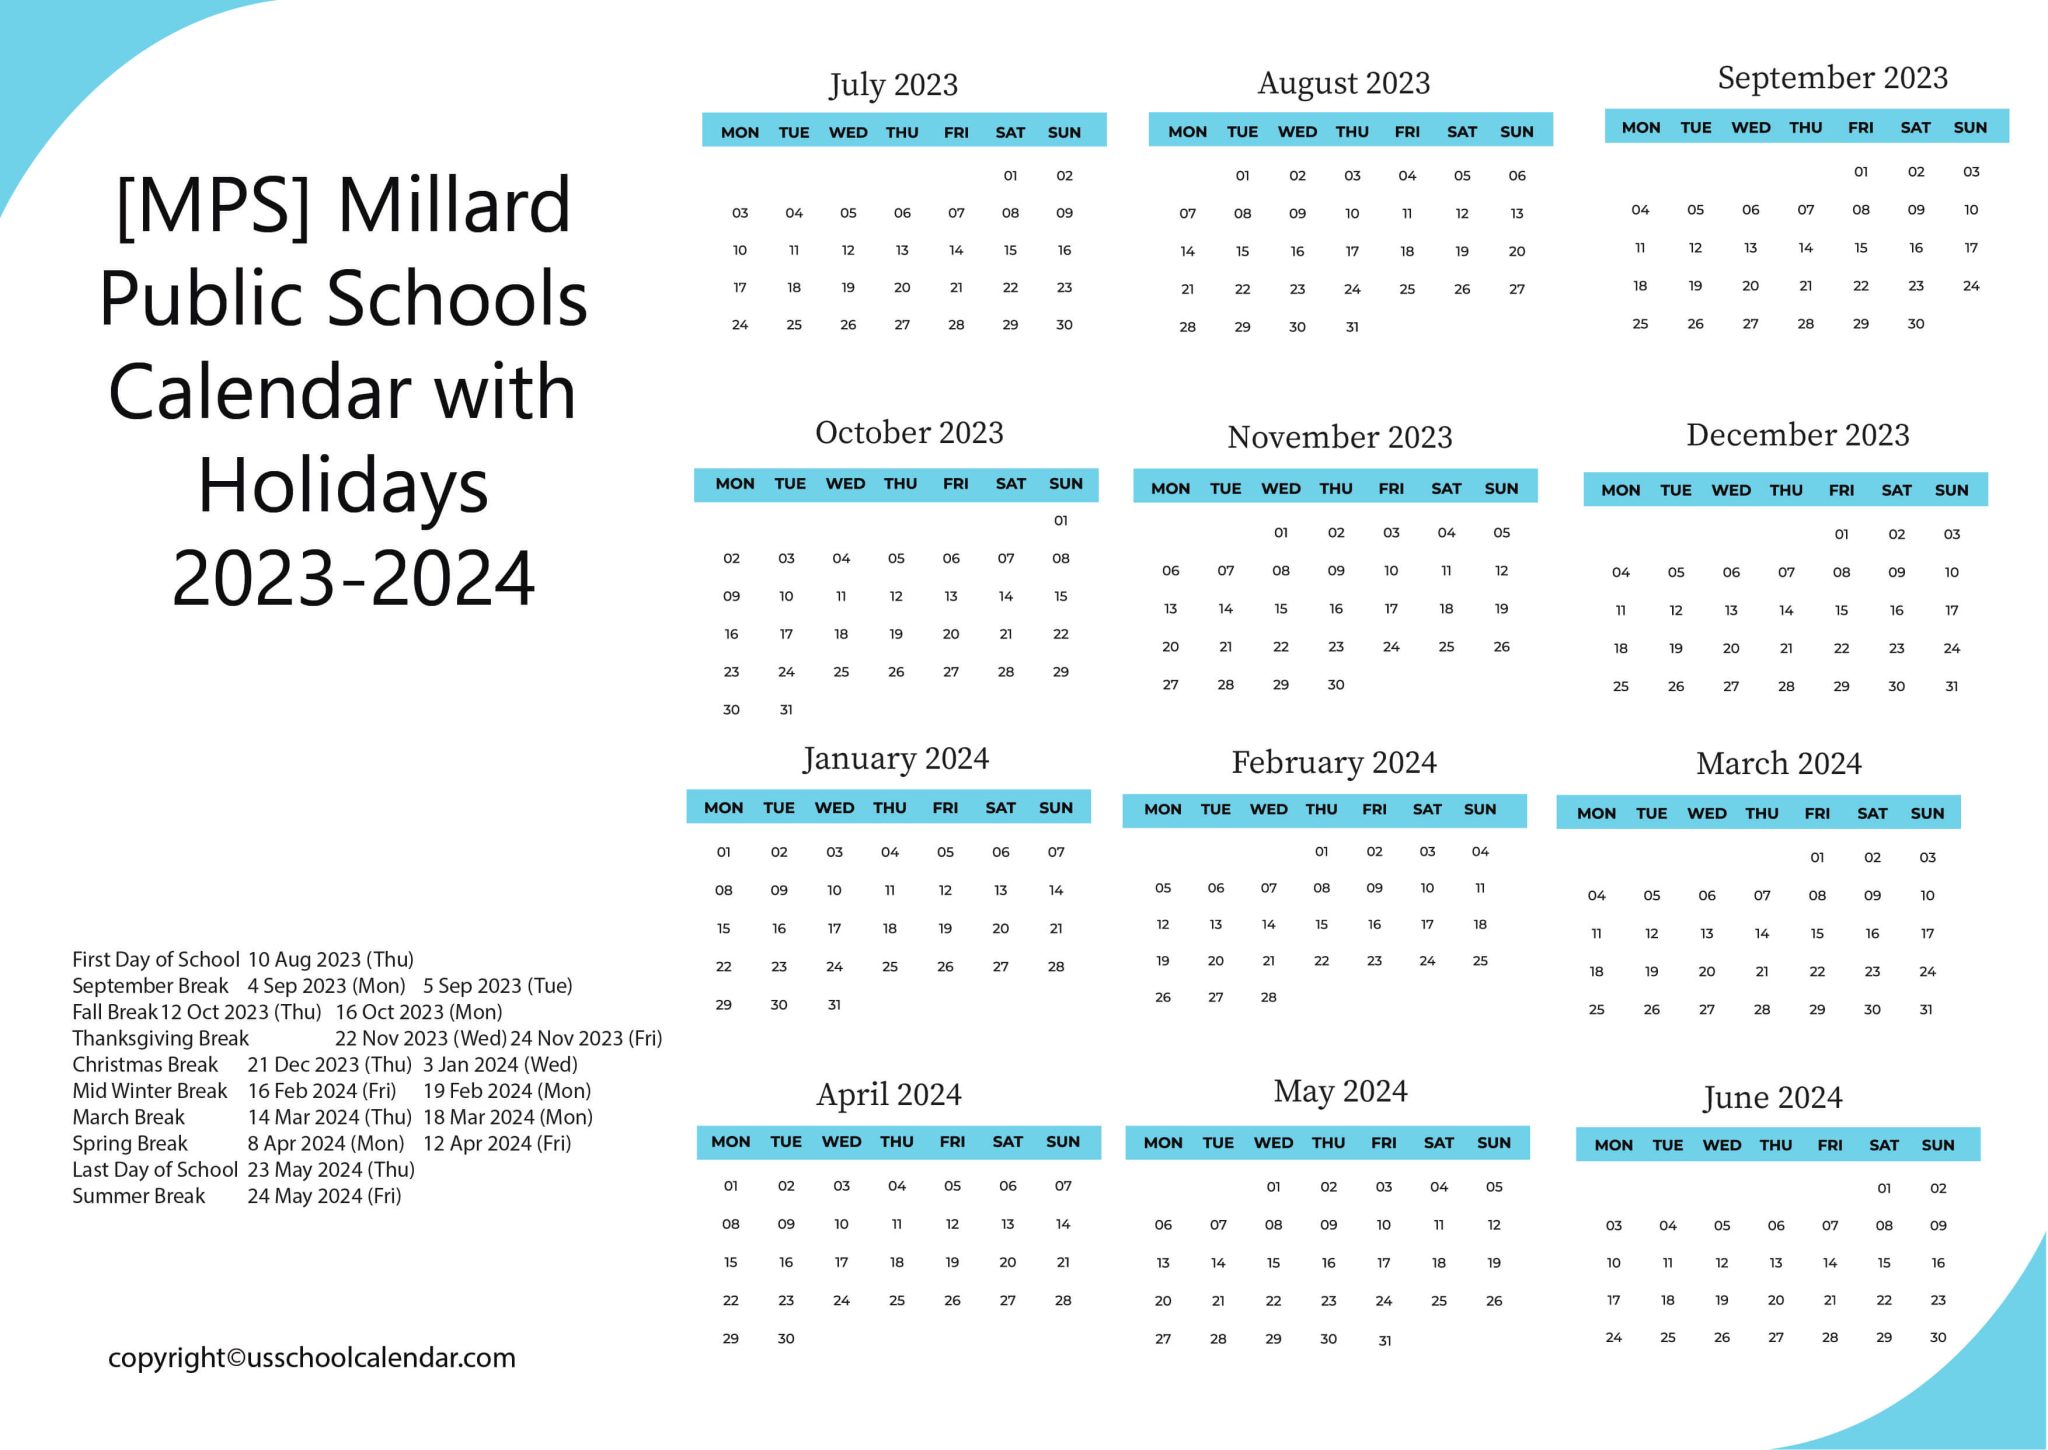 [MPS] Millard Public Schools Calendar with Holidays 2023-2024